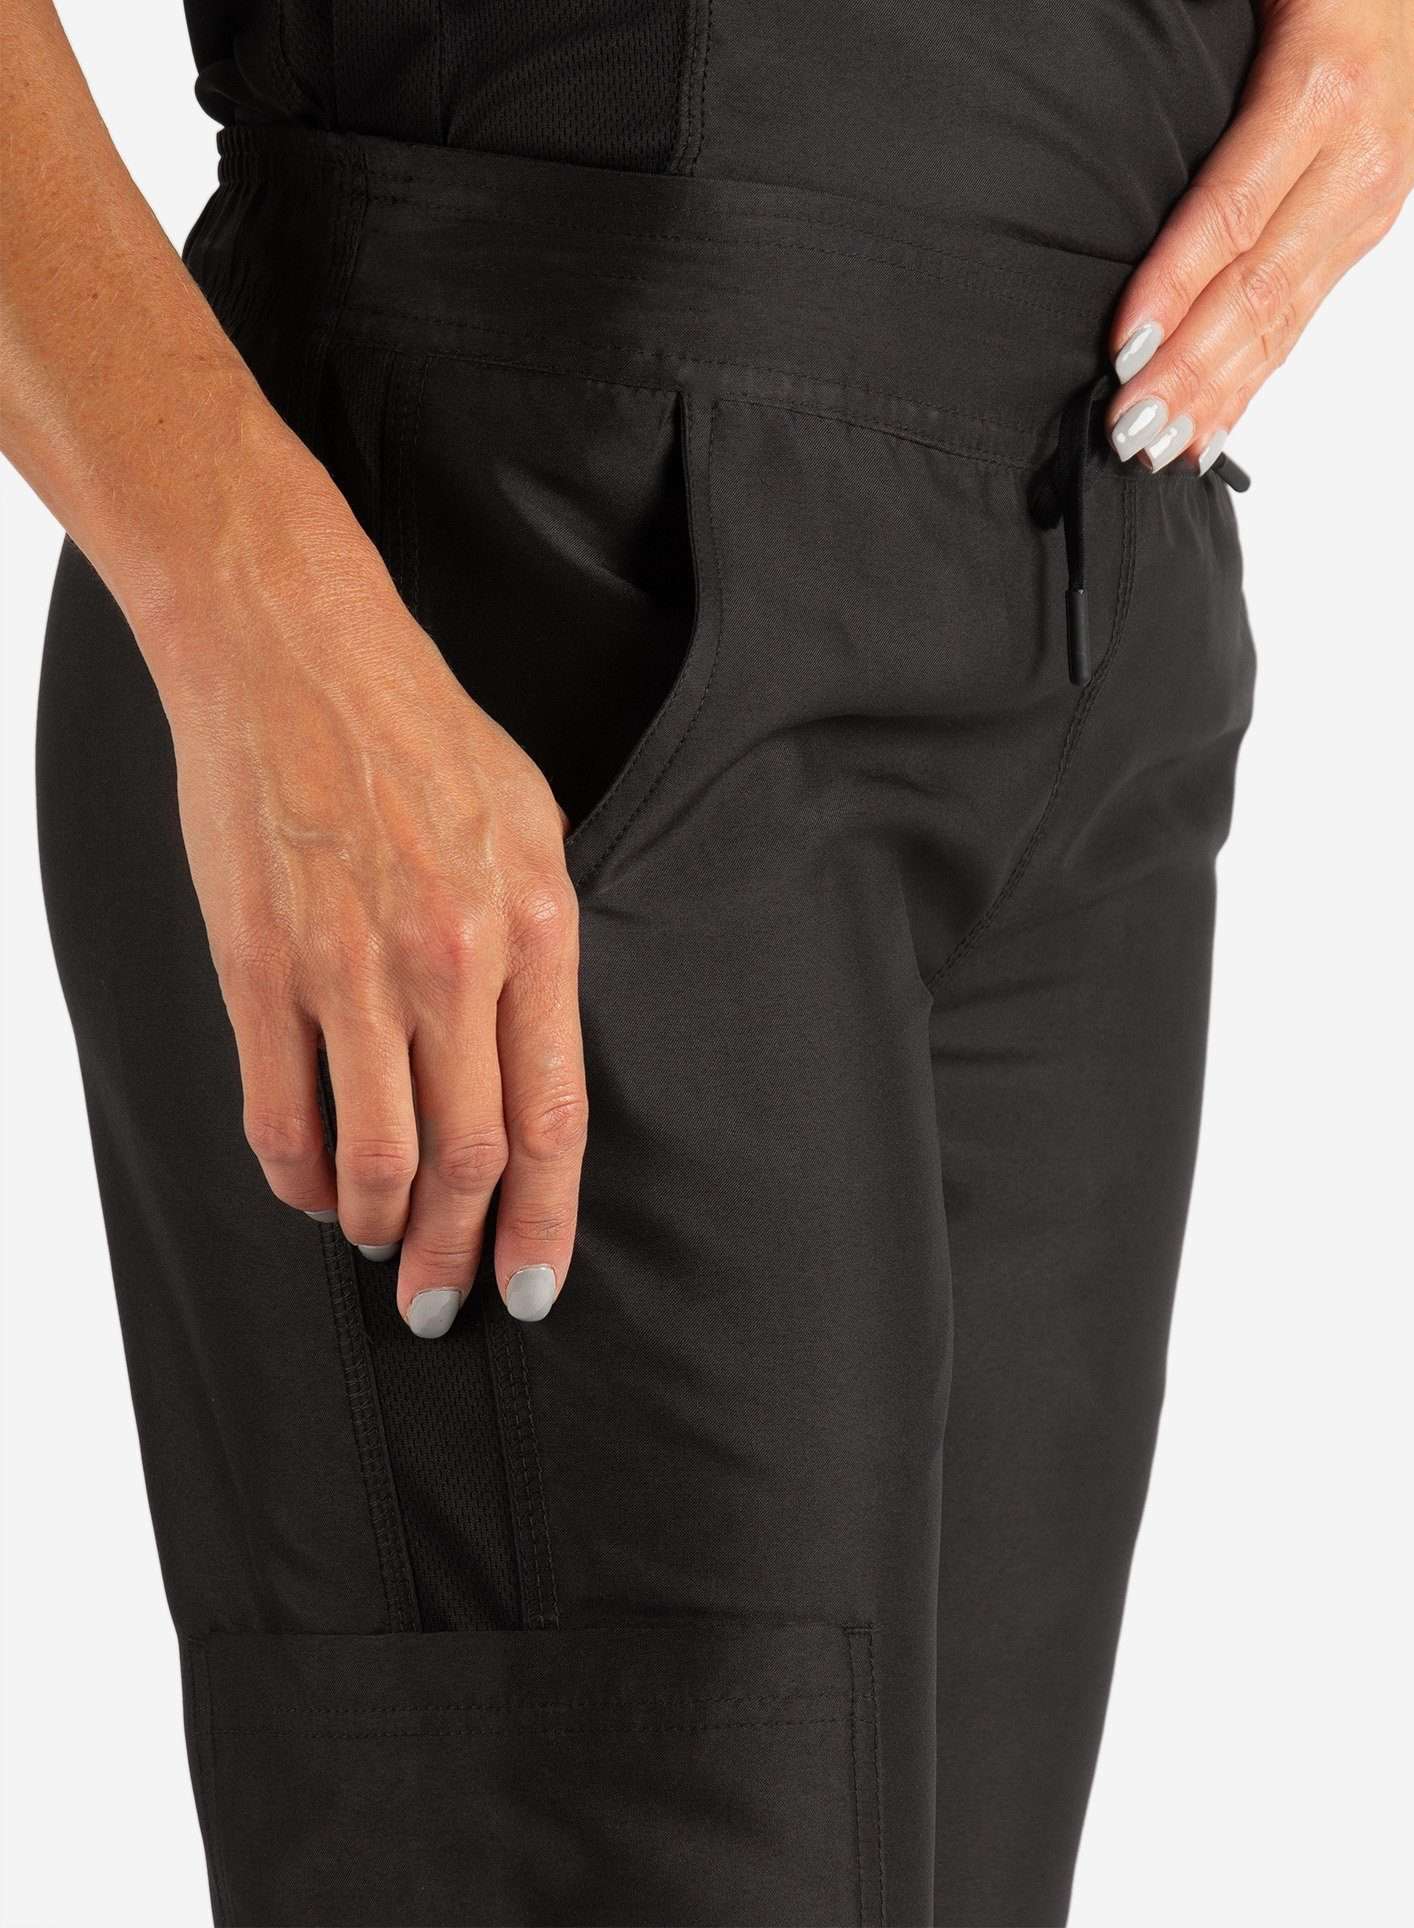 Women's Slim Fit Scrub Pants in Real Black Pocket View